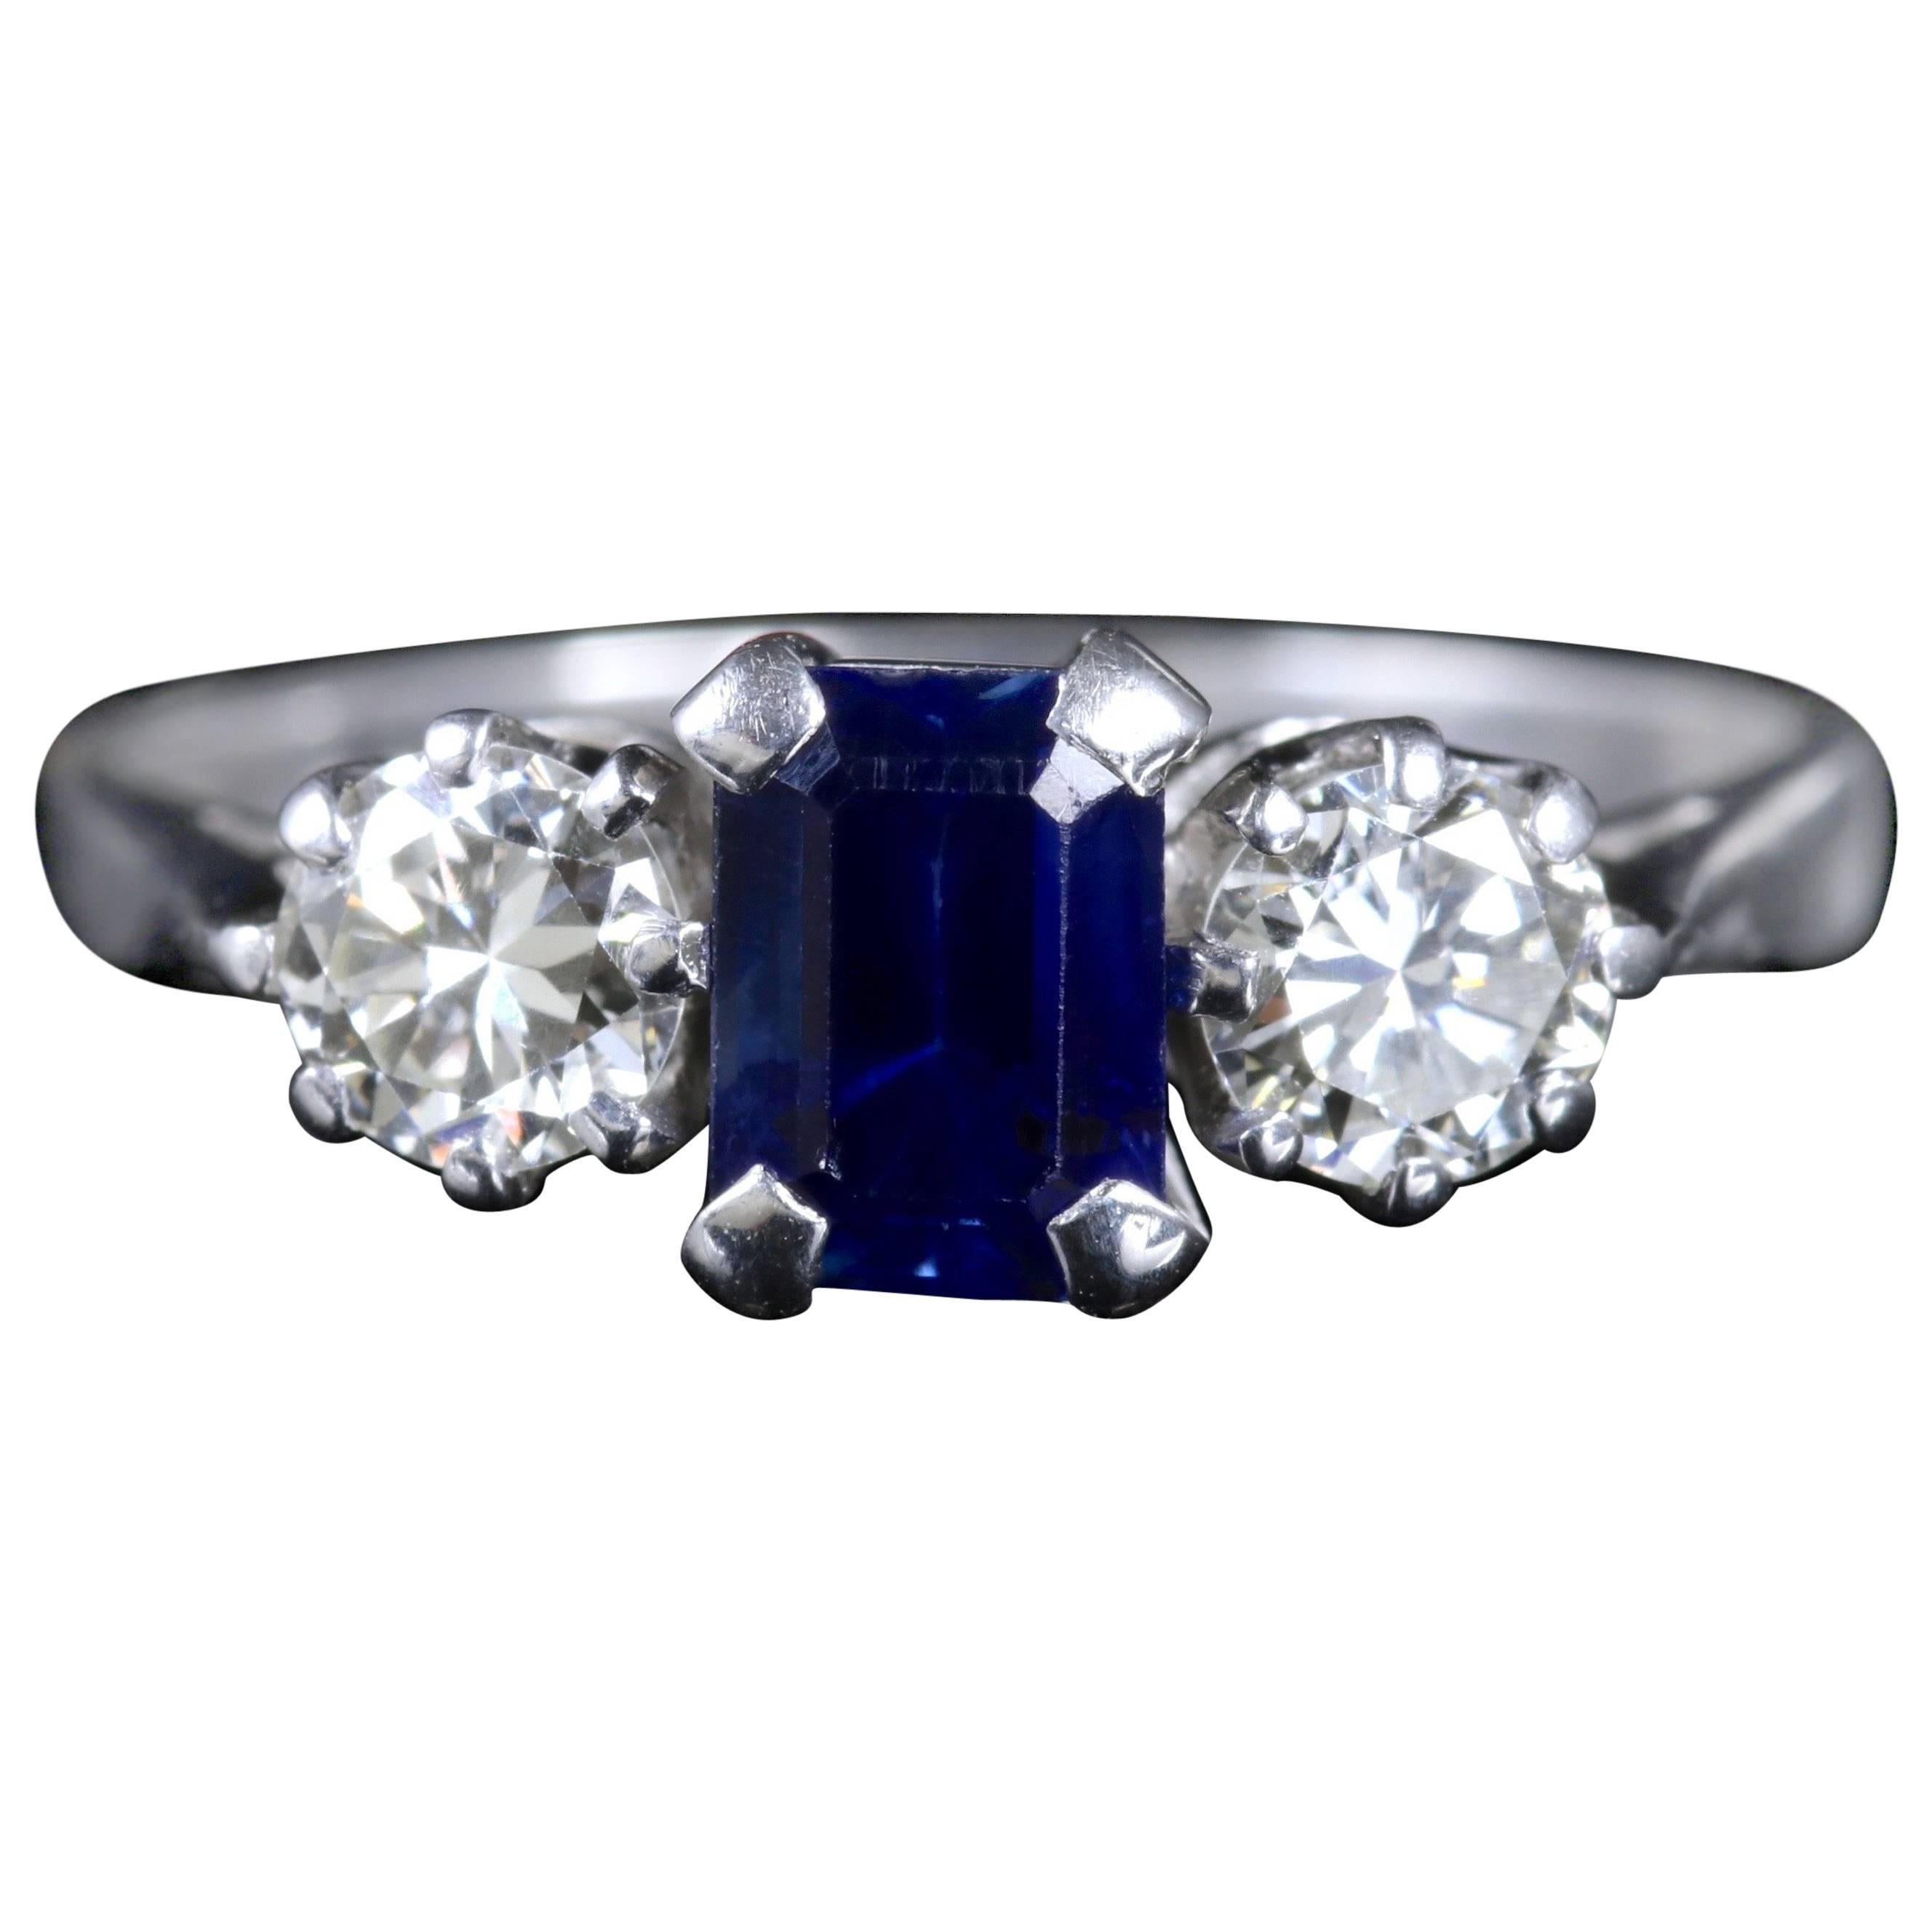 Antique Edwardian Sapphire Diamond Ring 18 Carat Trilogy Ring, circa 1915 For Sale